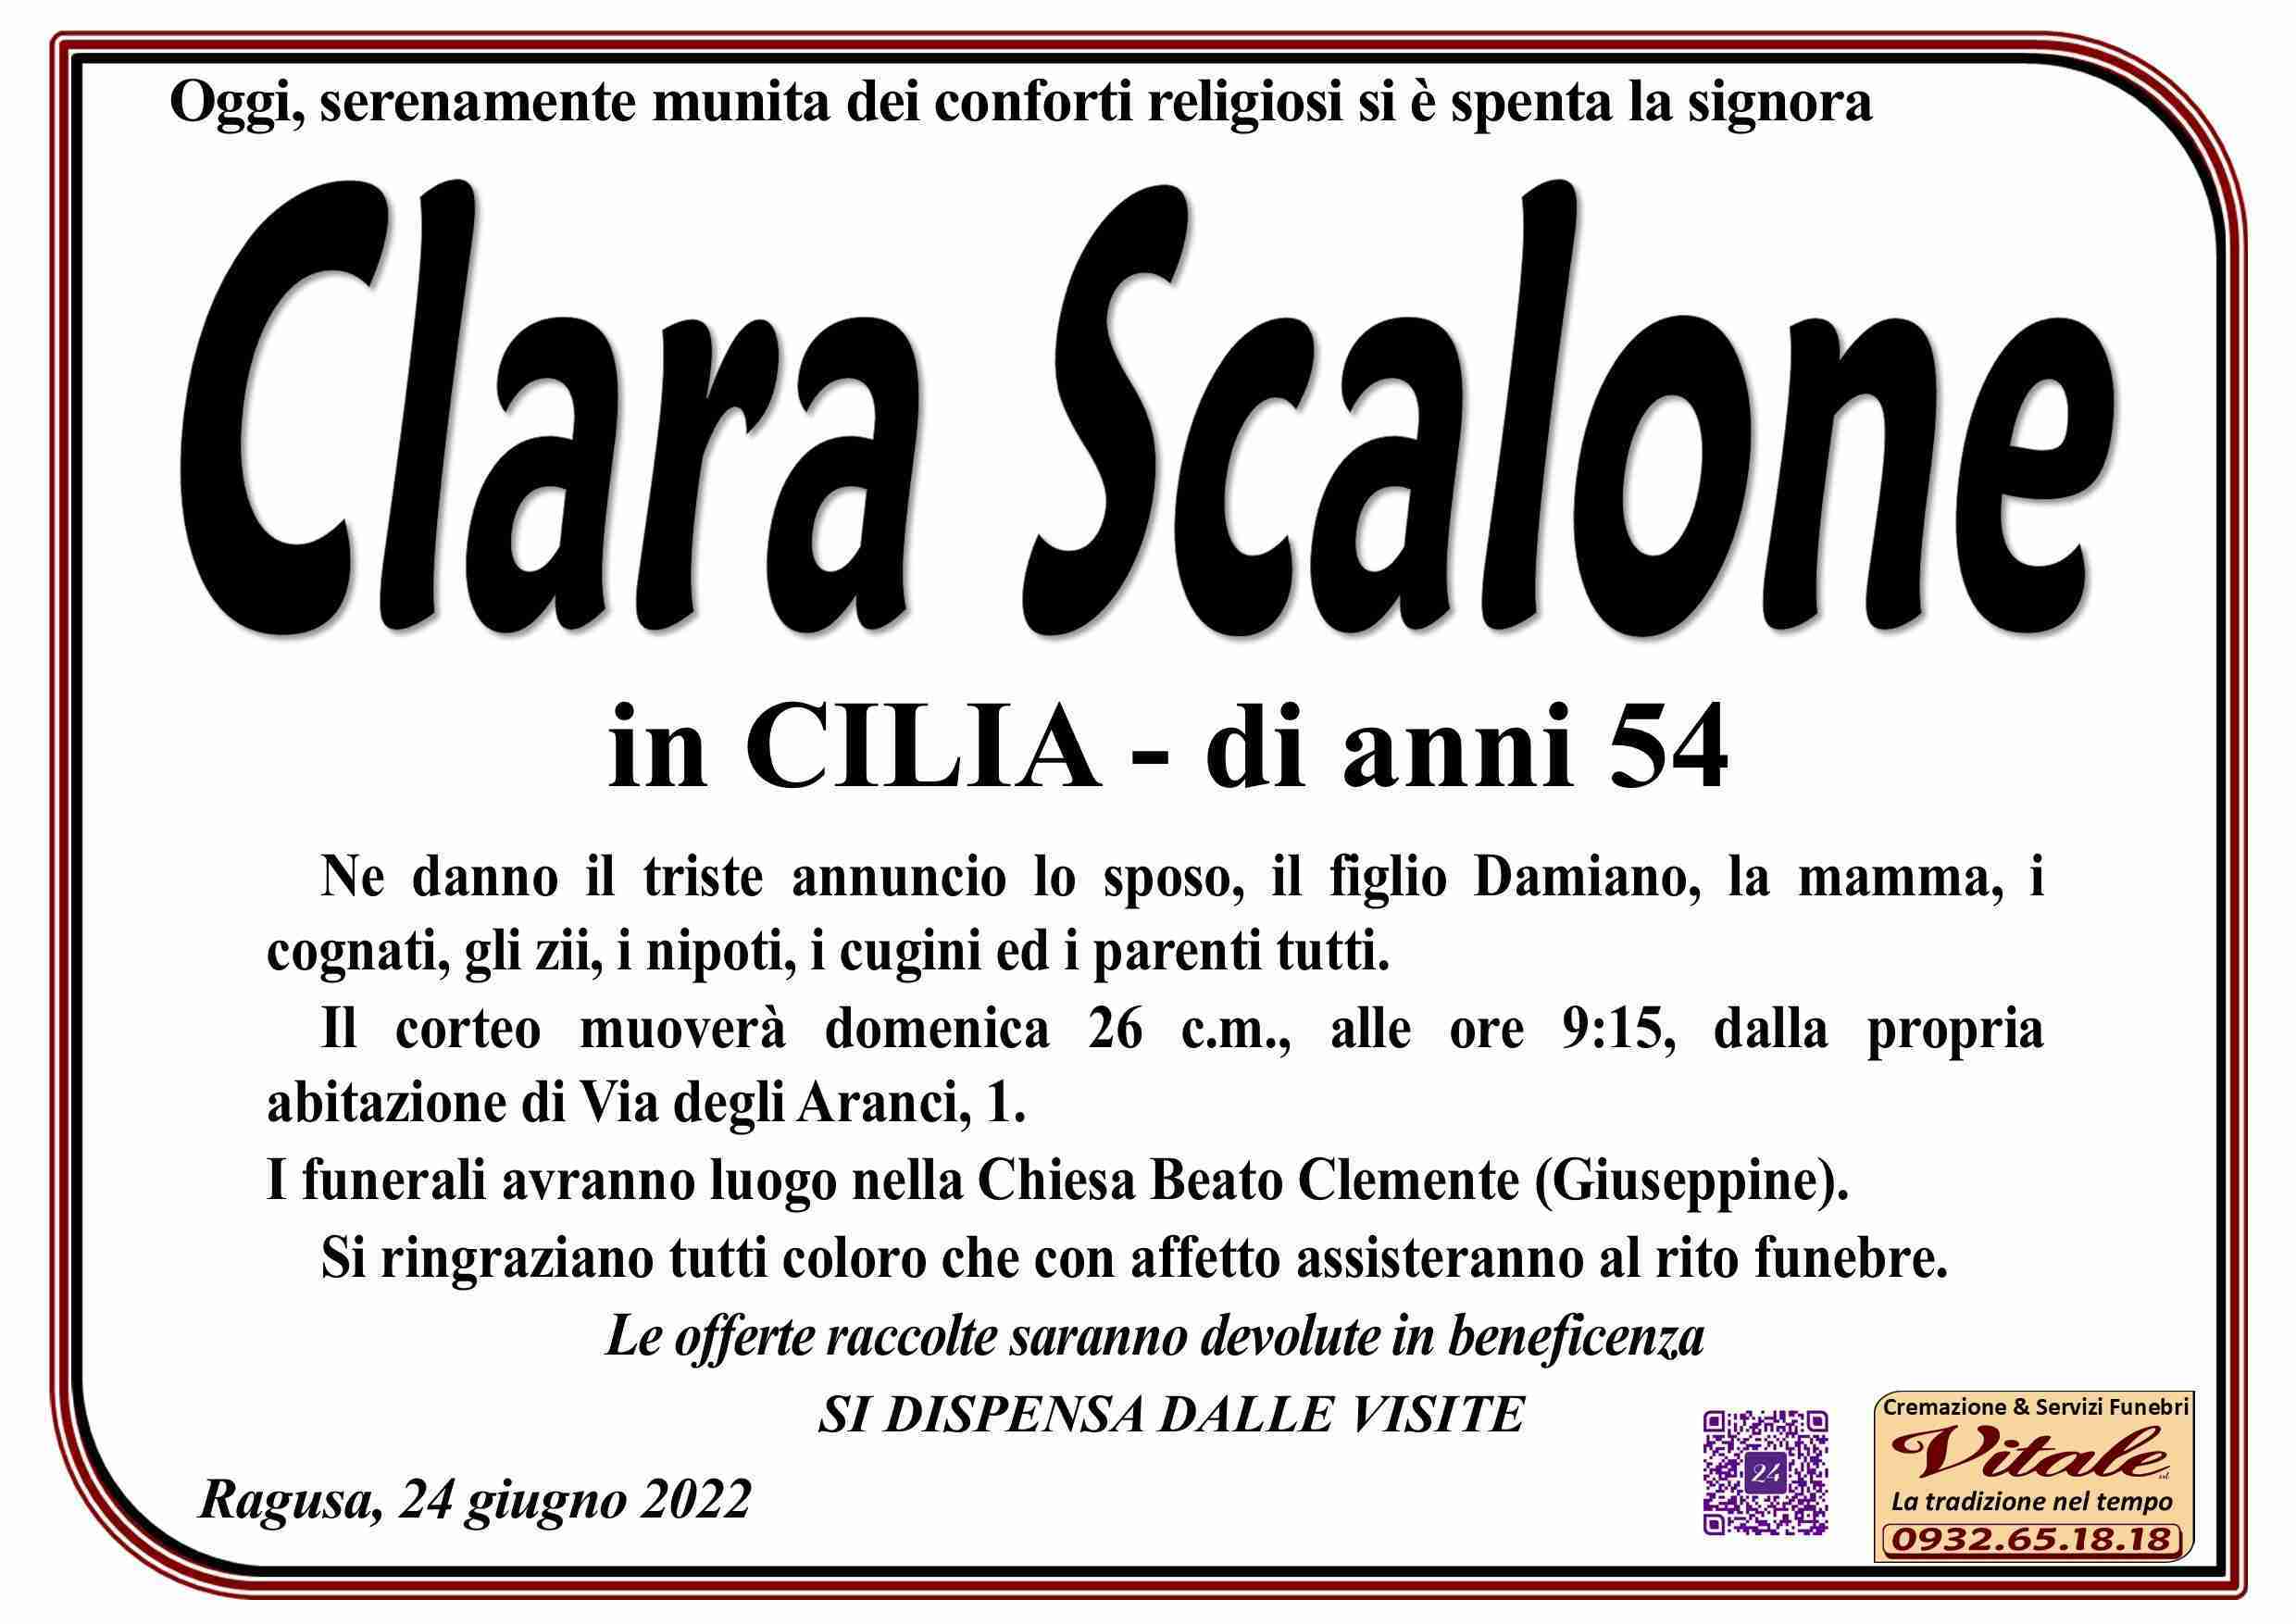 Clara Scalone